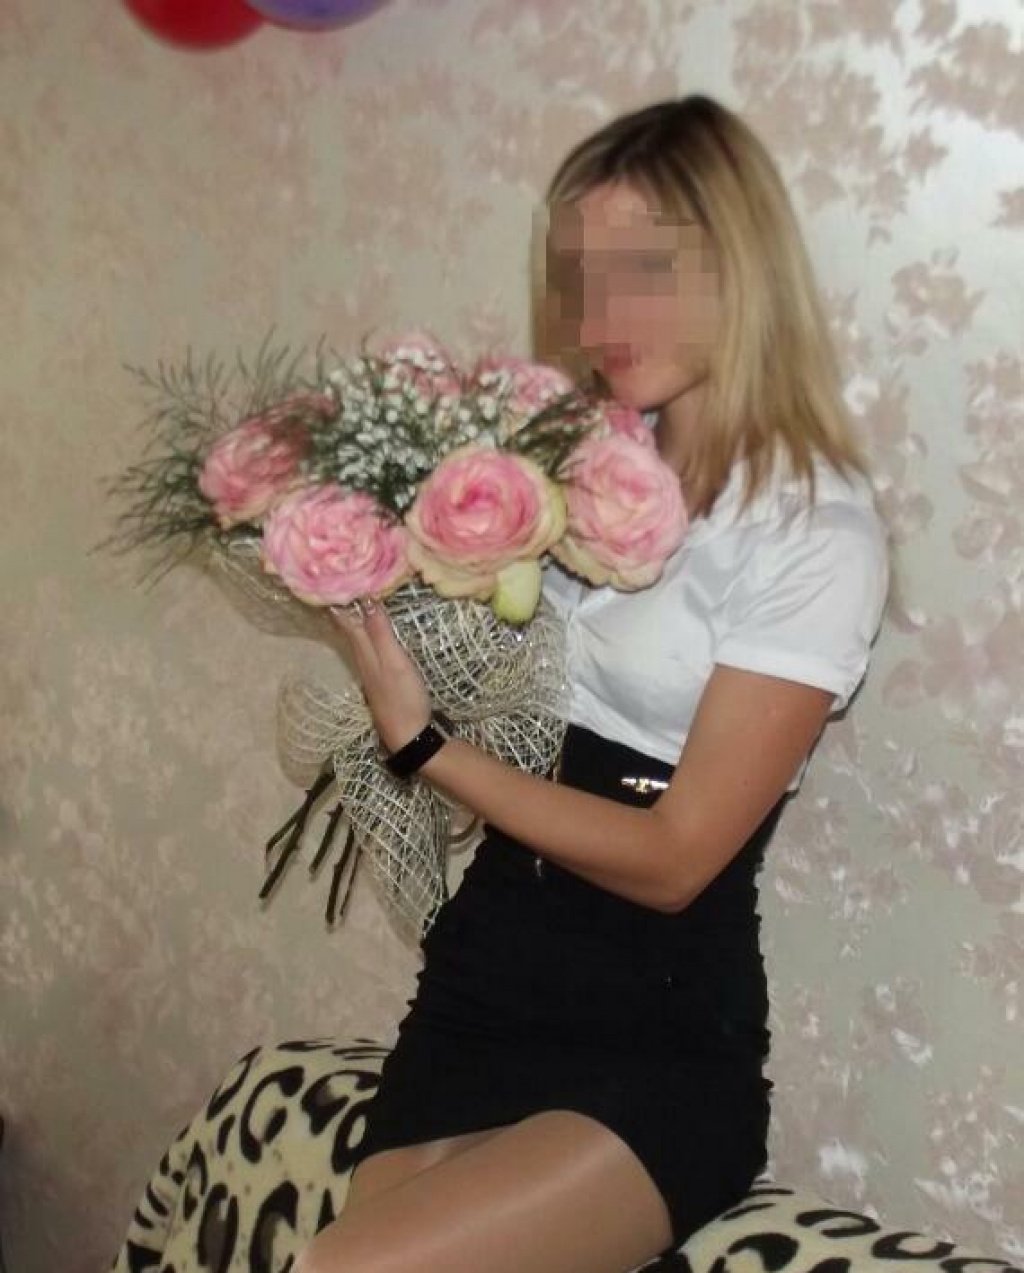 Вероника: проститутки индивидуалки в Сочи